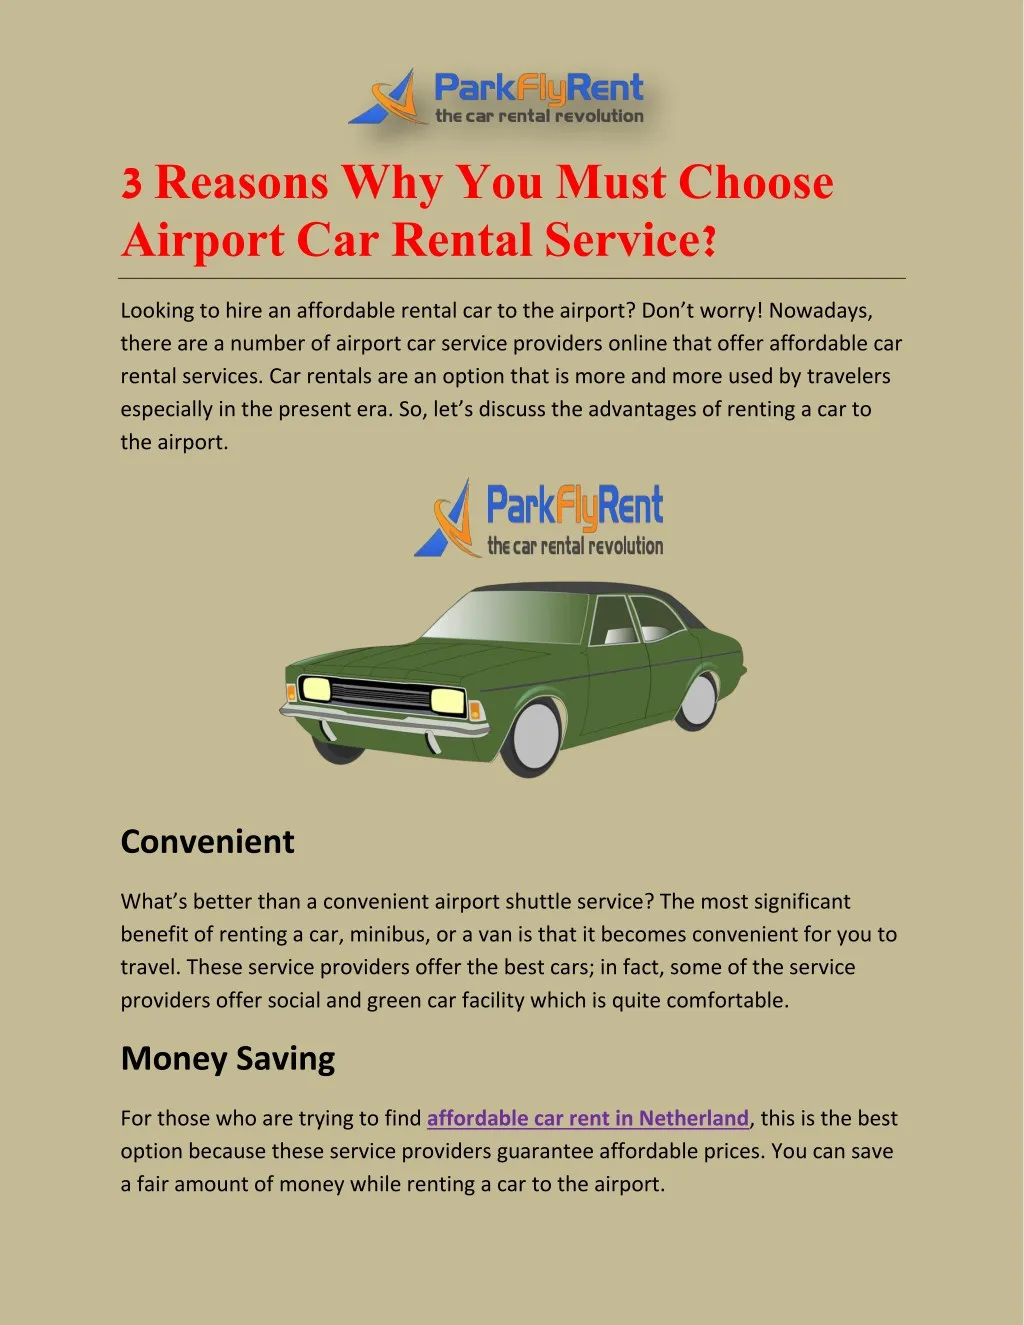 3 reasons why you must choose airport car rental